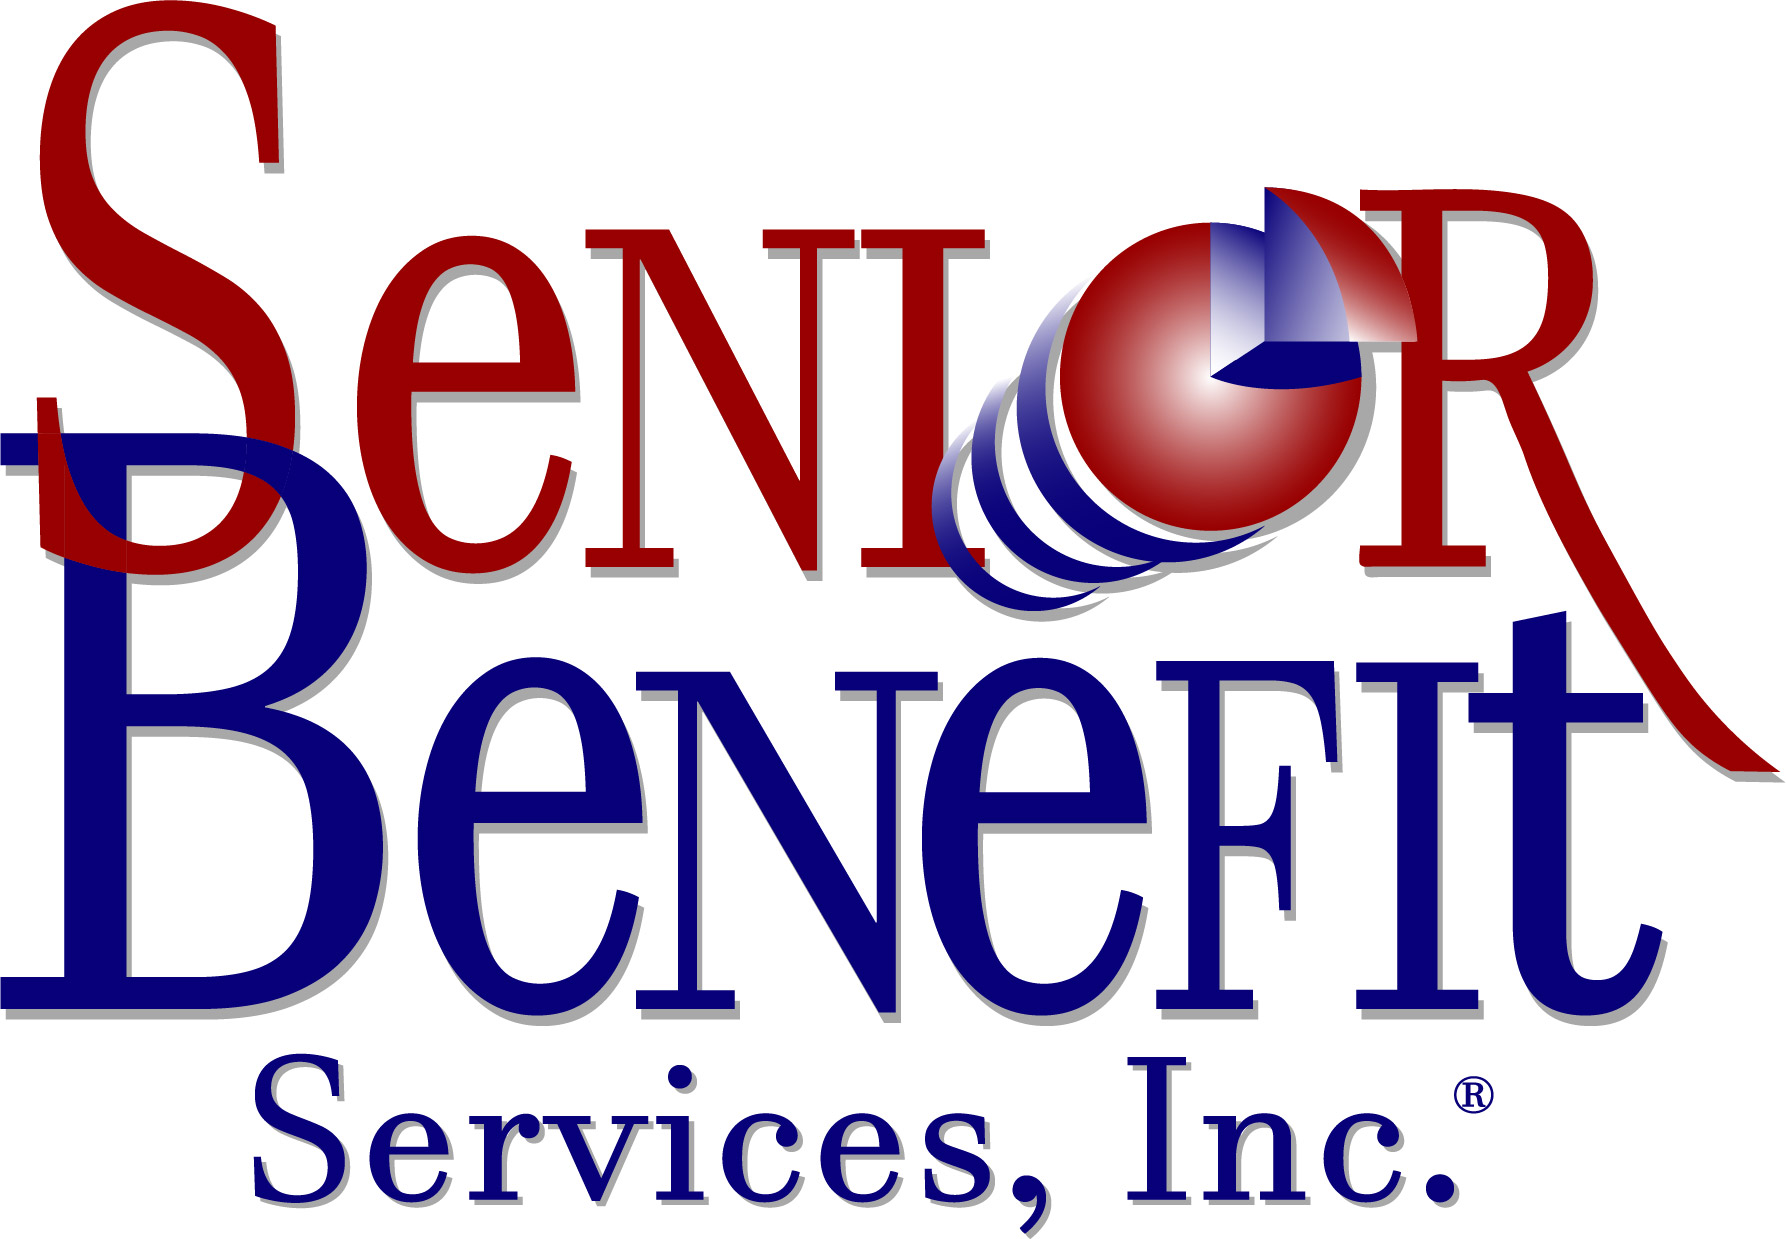 Senior Benefit Services, Inc